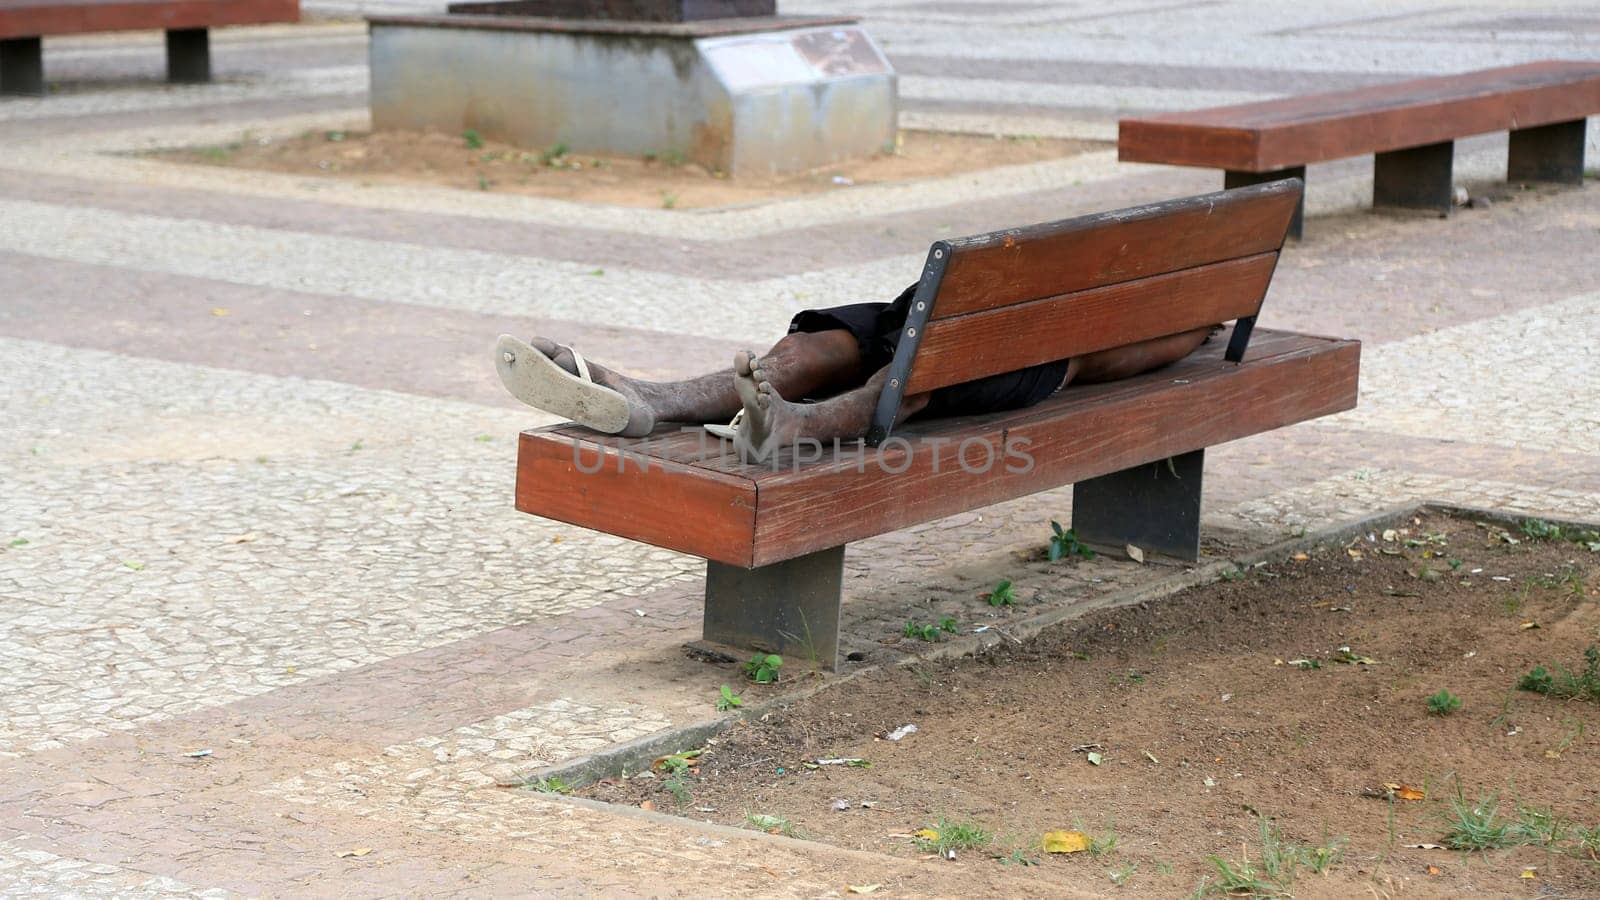 beggar sleeping on the street by joasouza